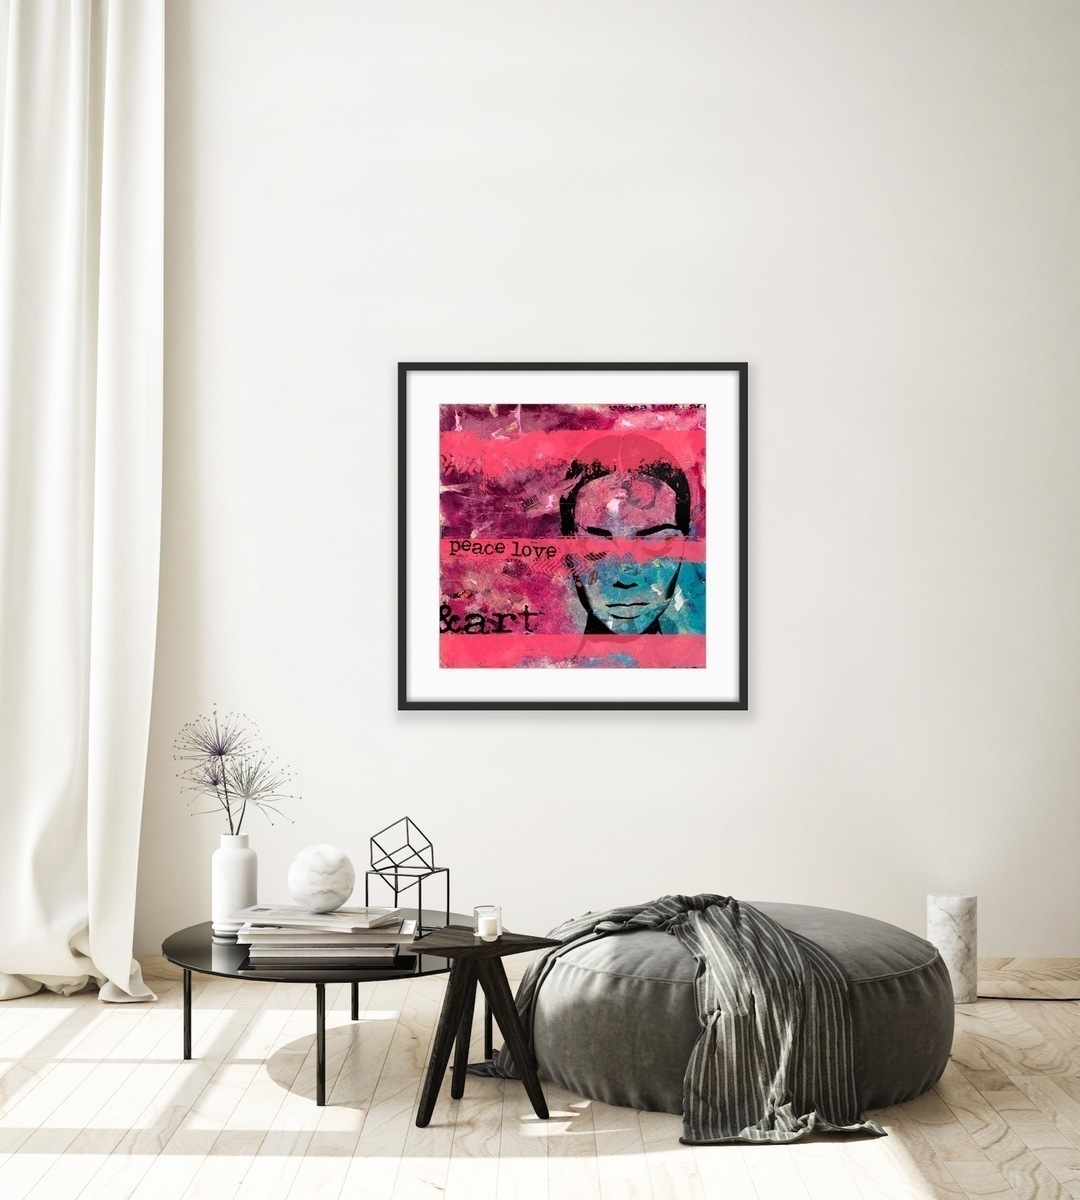 Fotografie Kunst kaufen – Professionell – peace, love & art (Poster, ohne Rahmen)